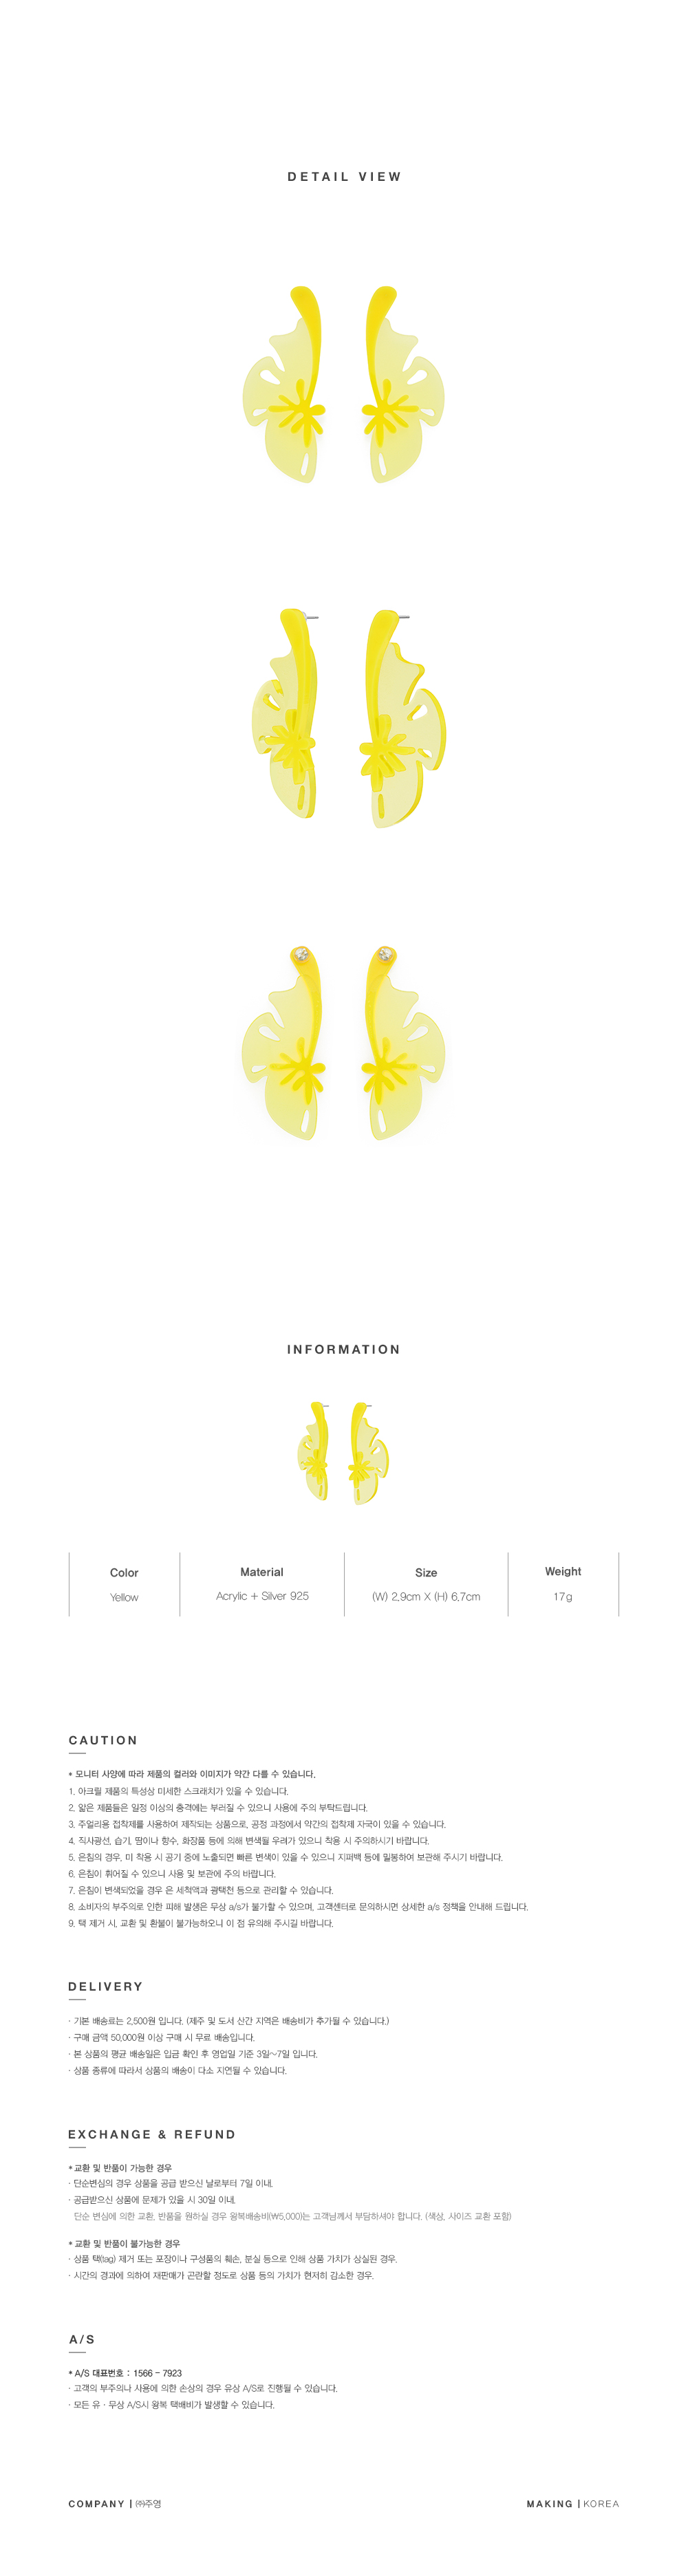 BBYB Summer Hibiscus Earring (Yellow)